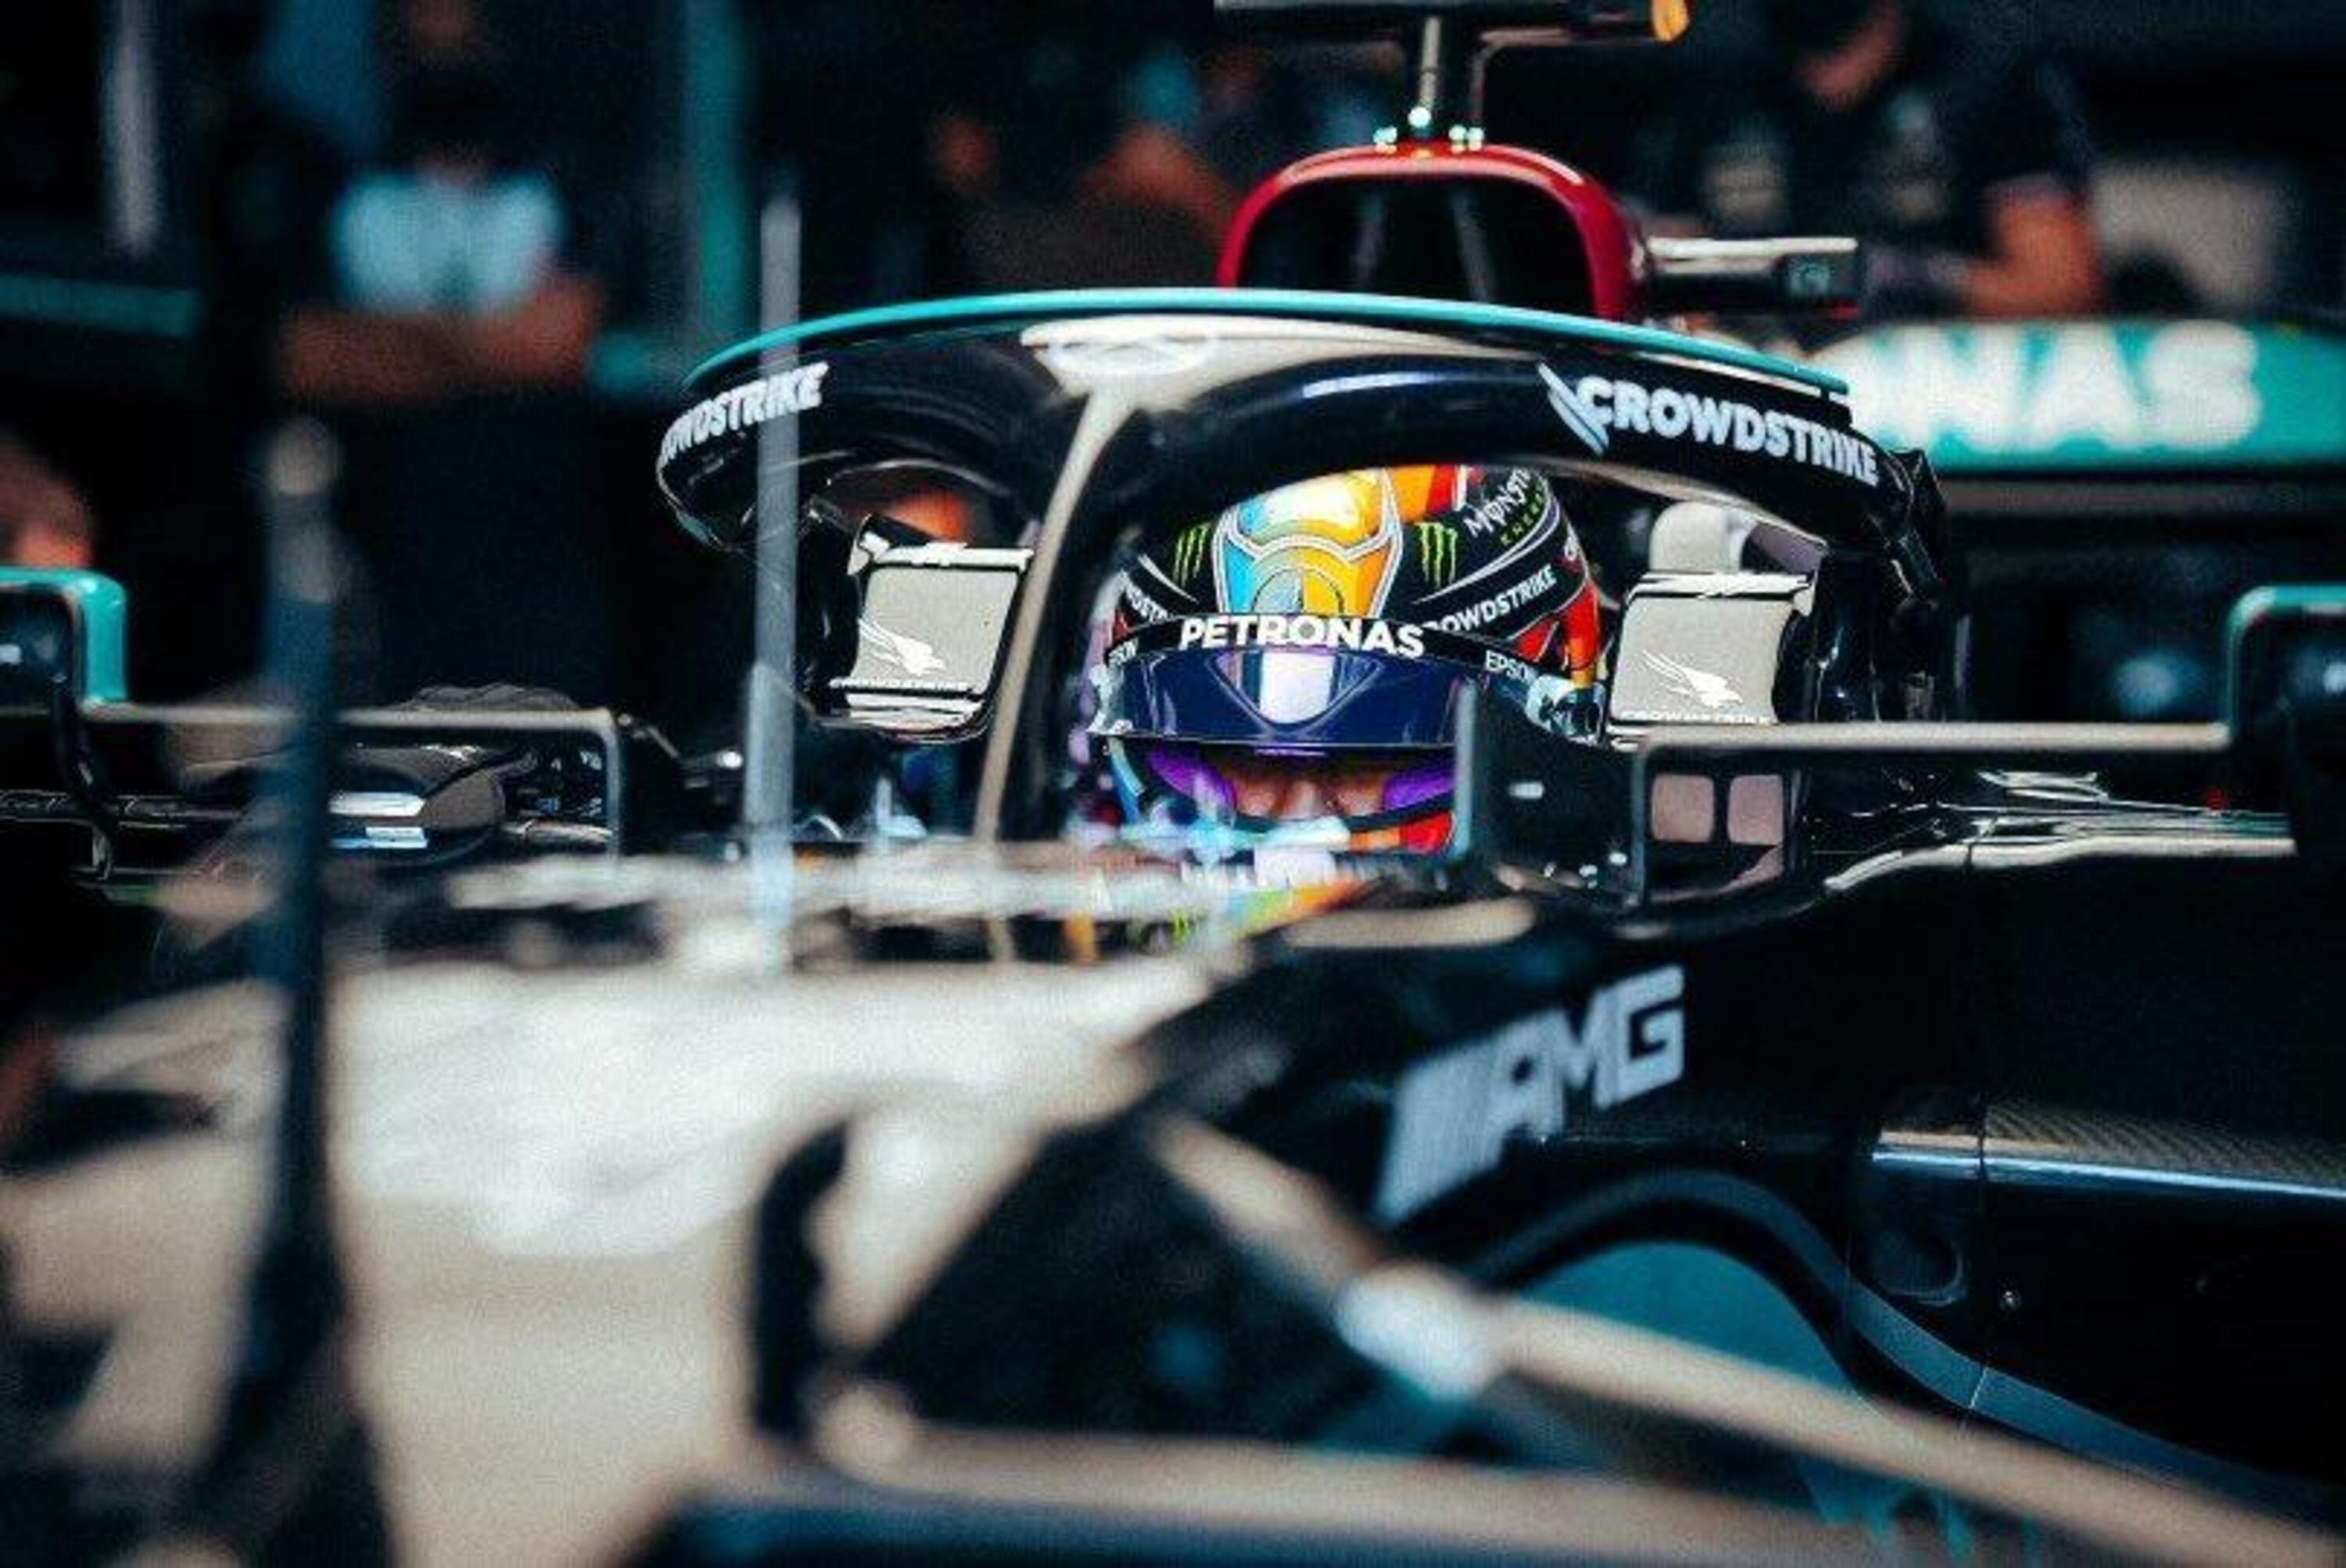 F1, casco arcobaleno per Lewis Hamilton in Qatar